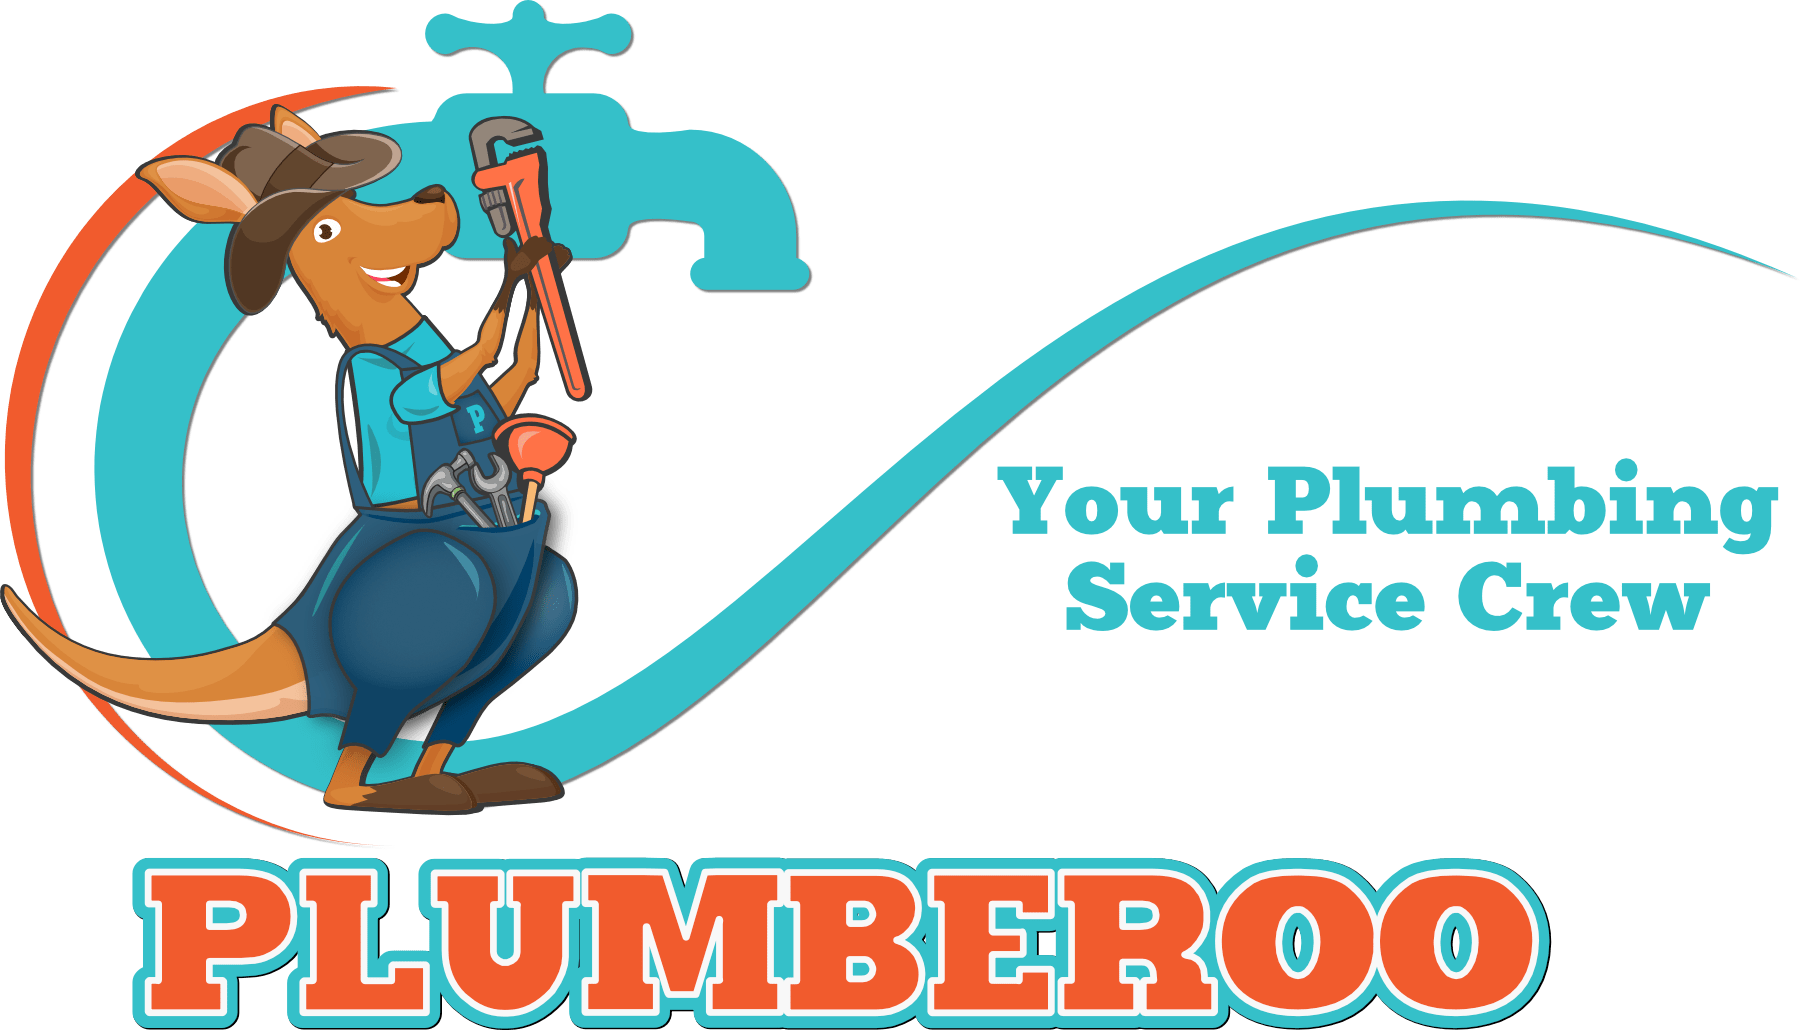 Plumberoo Plumbing Services - Plumber for N. Texas